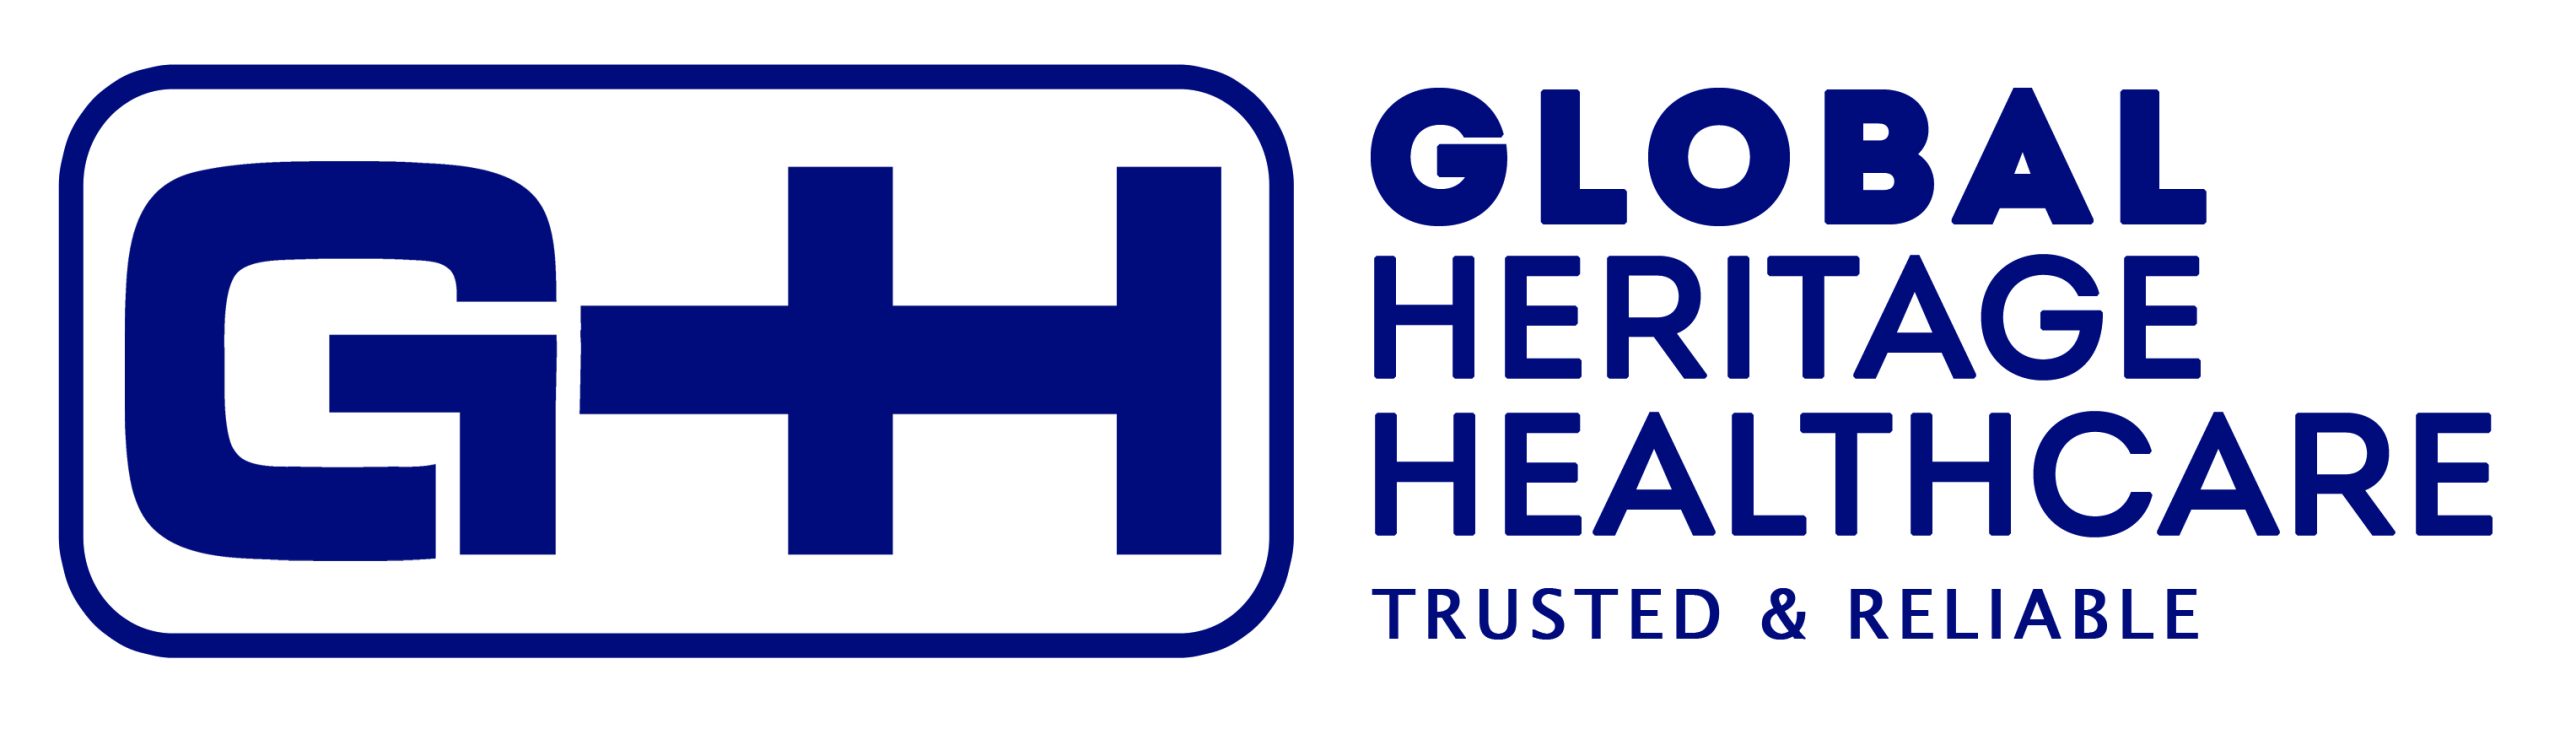 Global Heritage Healthcare Ltd